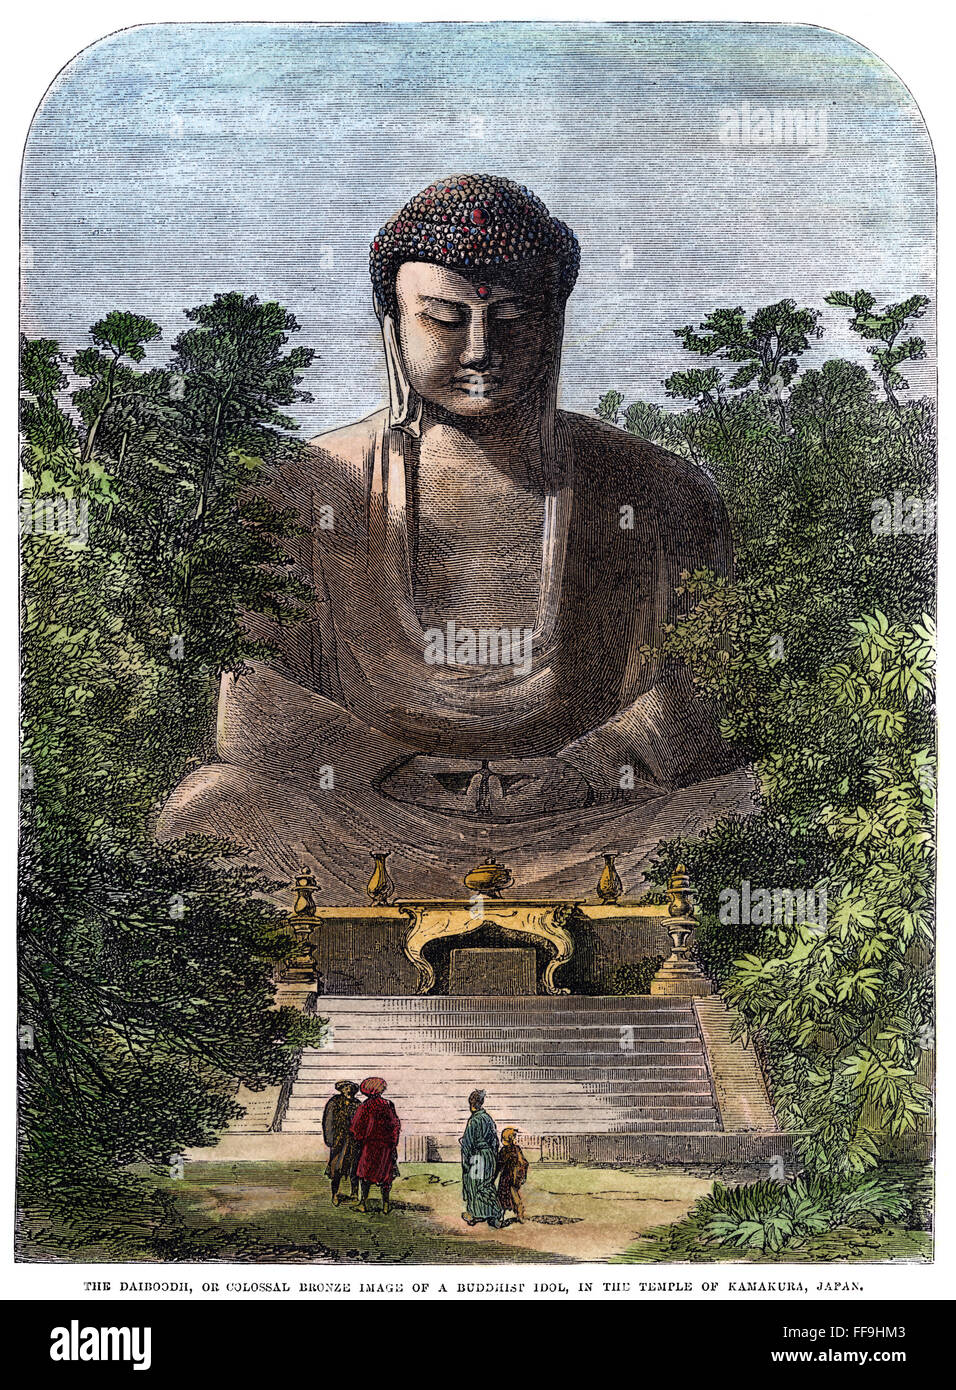 BUDDHA: KAMAKURA, JAPAN. /n'The Daibutsu, or colossal bronze image of a Buddhist idol, in the temple of Kamakura, Japan.' Color engraving, 1865. Stock Photo